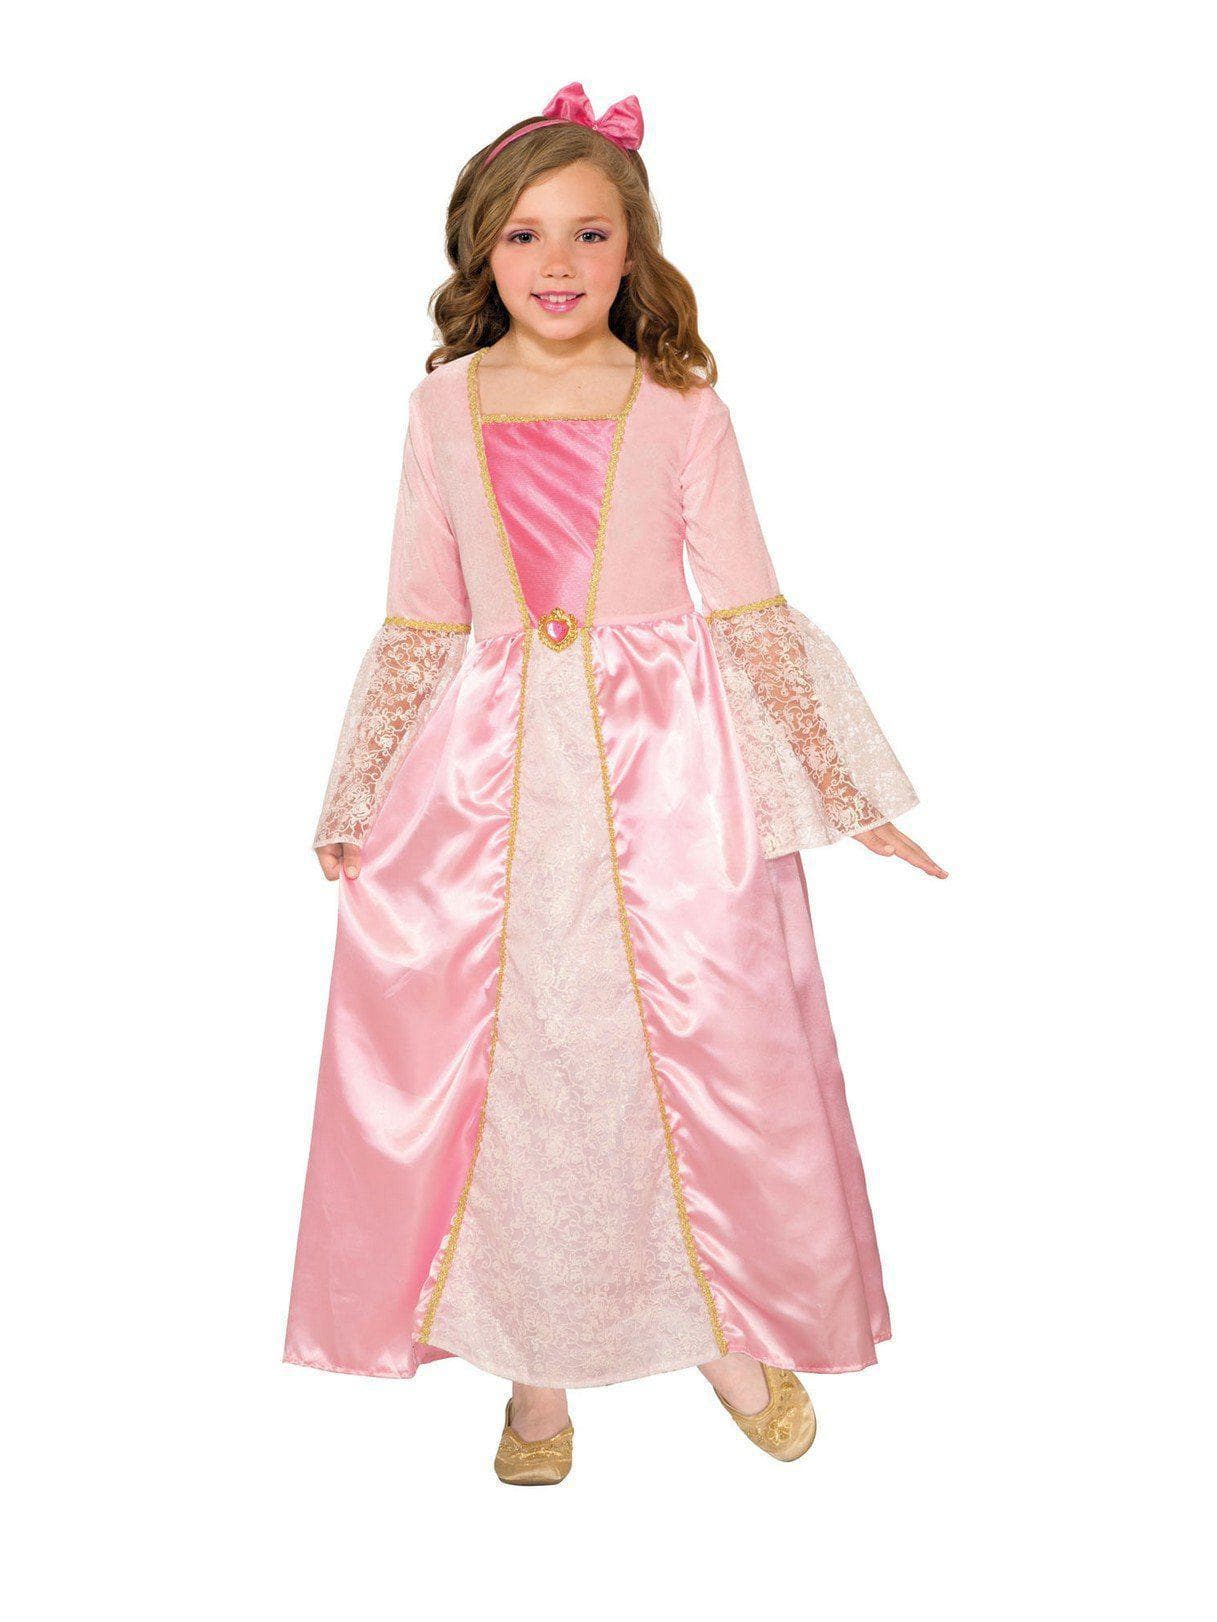 Kid's Princess Lacey Costume - costumes.com